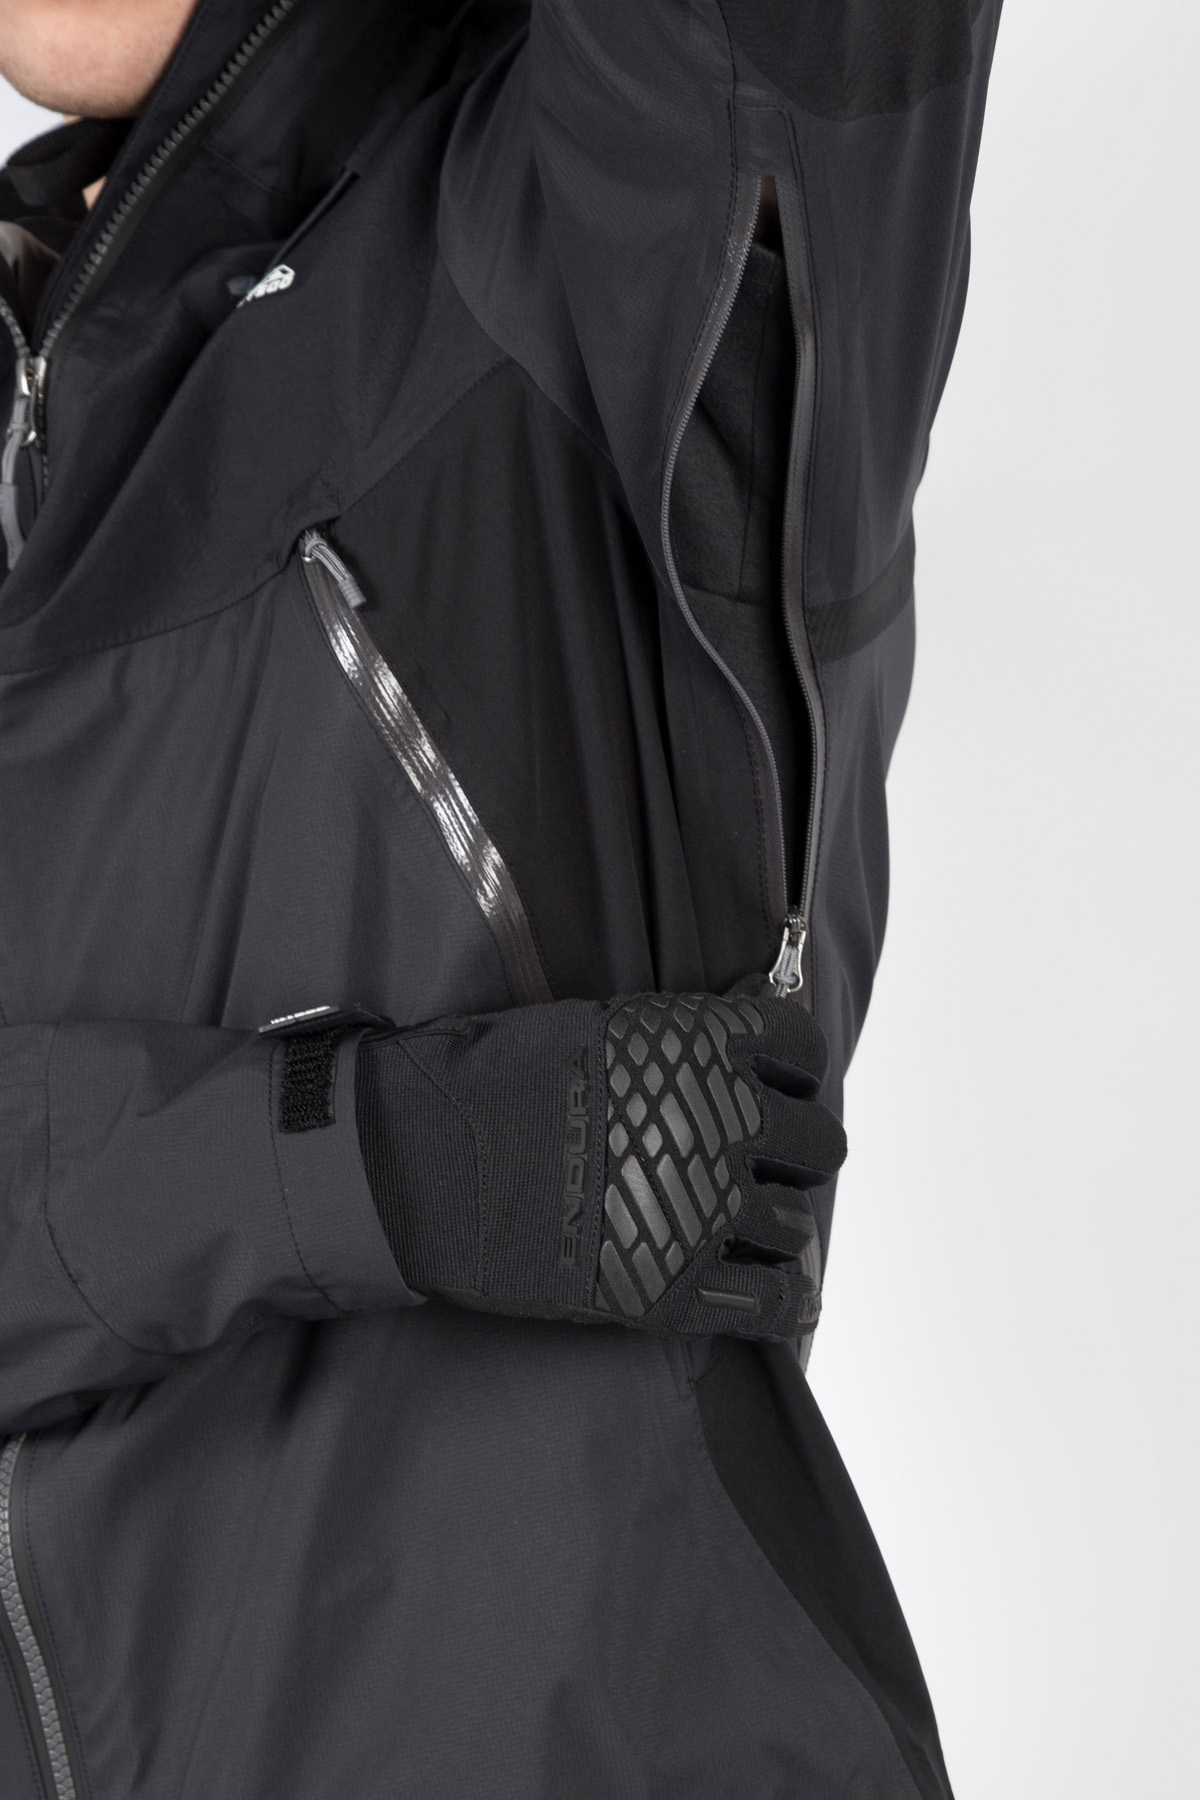 Danny MacAskill gets #DownrightDirty in the new Endura MT500 rain suit